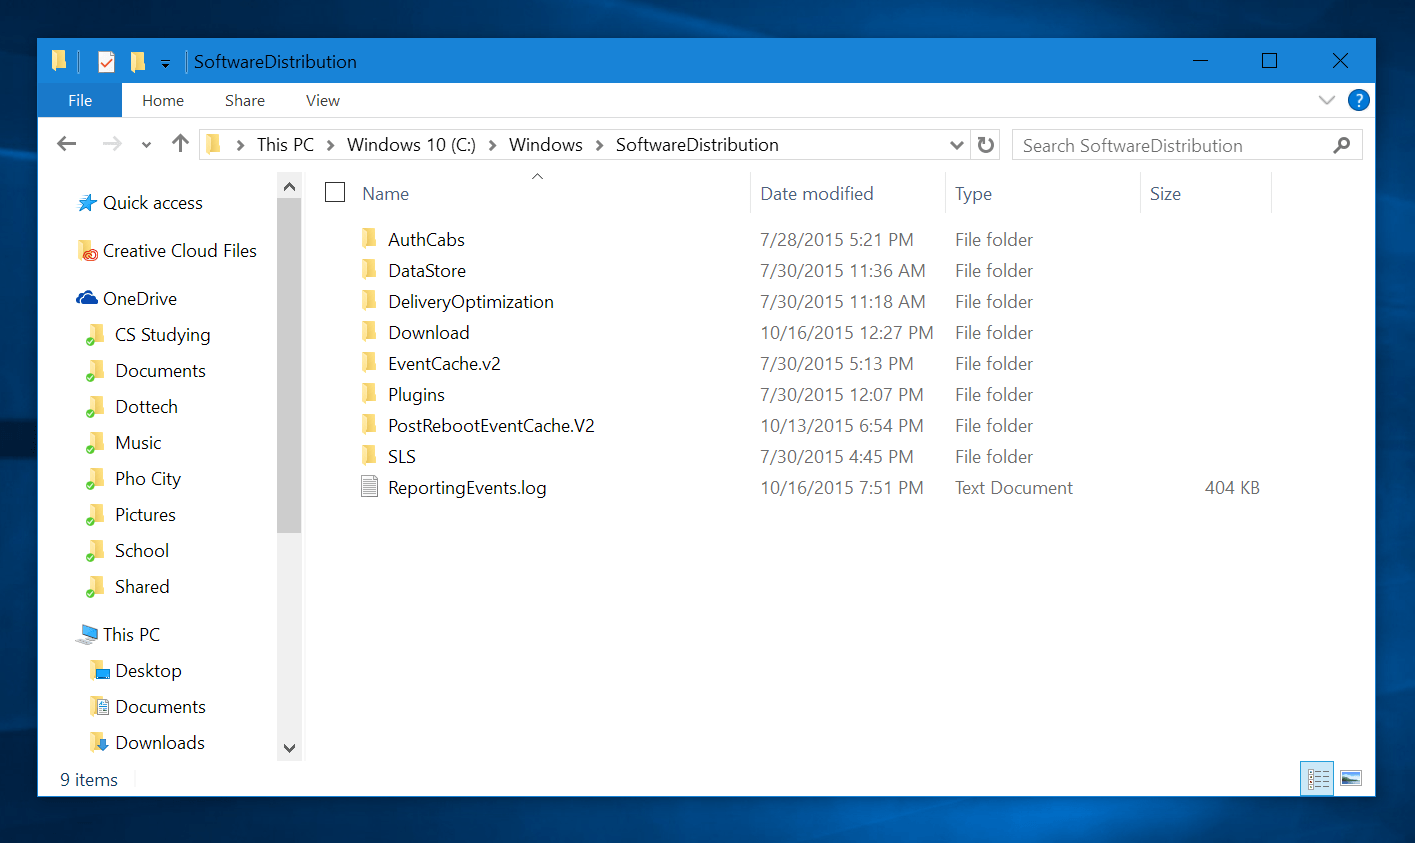 licecap download for windows 10